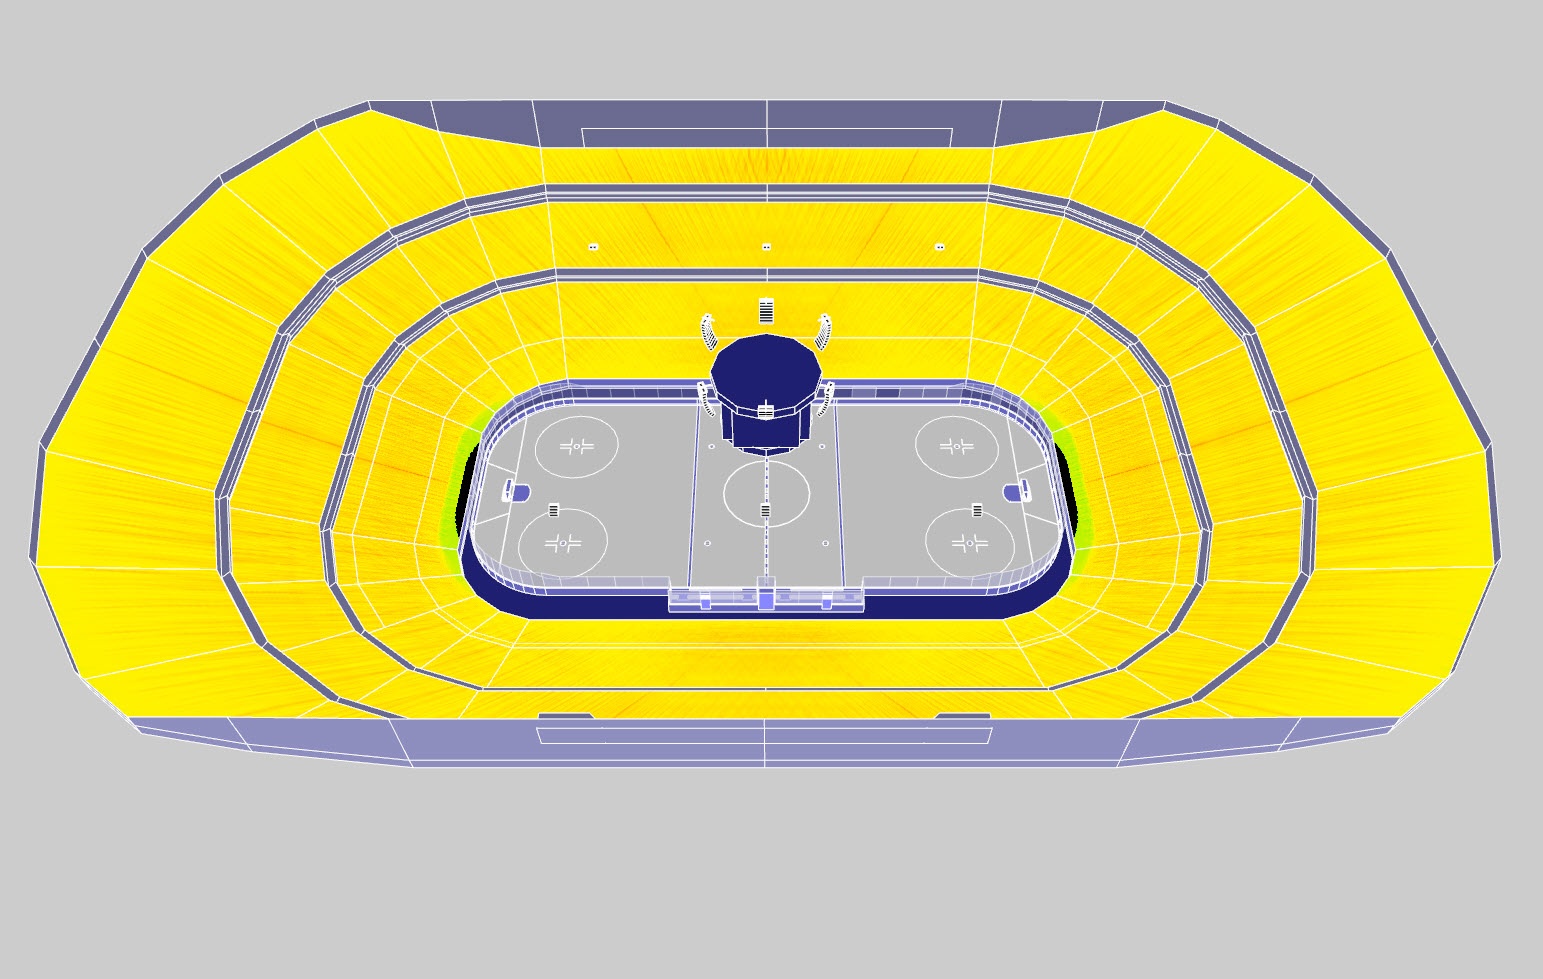 3D Model of sound system set up by L-Acoustics of their K2 line arrays at the VTB Indoor Arena